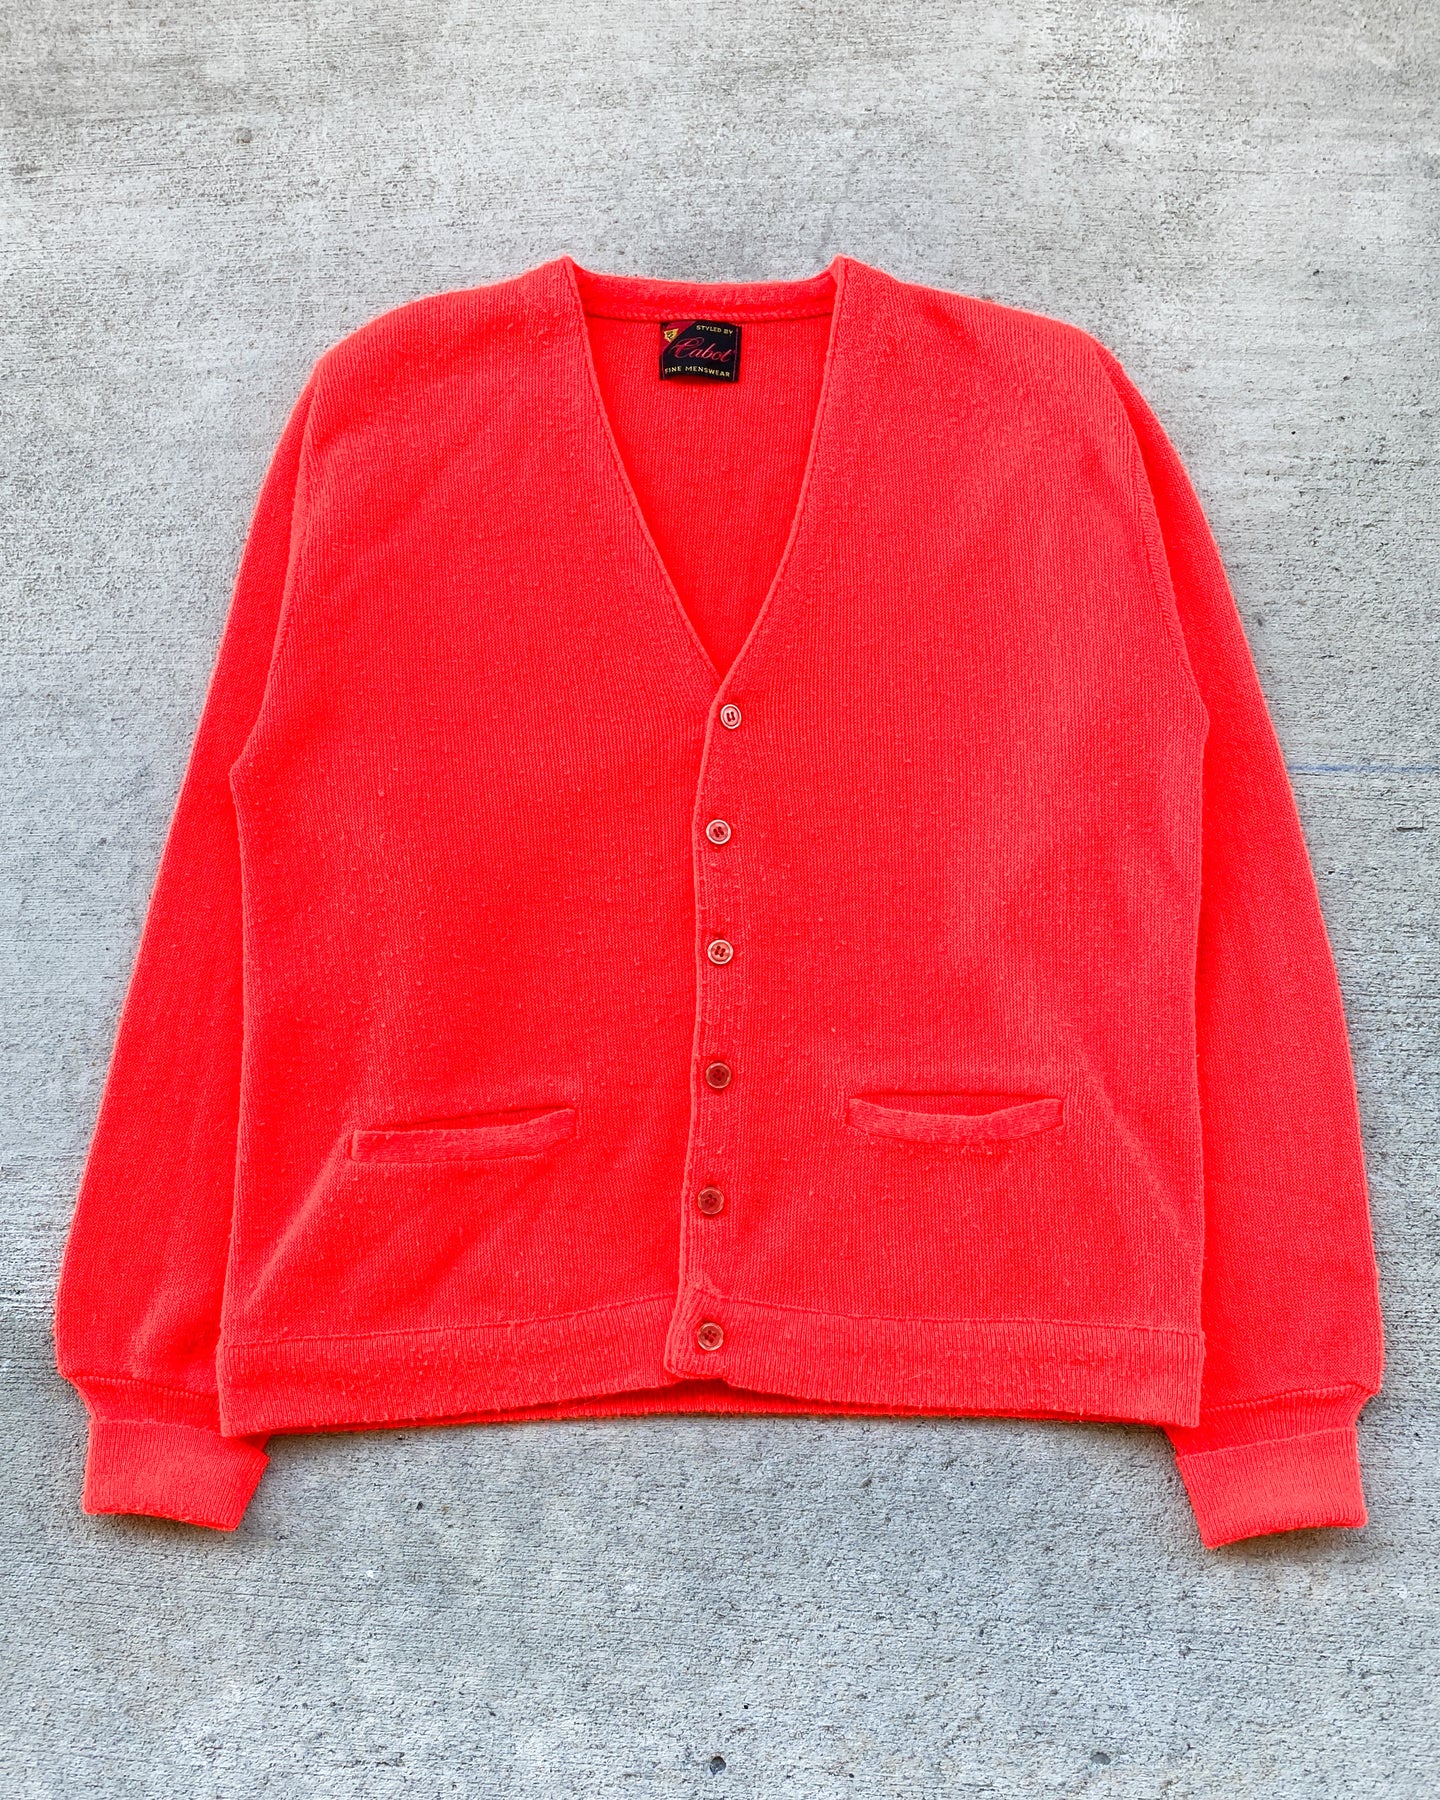 1960/1970s Cabot Cardigan Sweater - Size Large